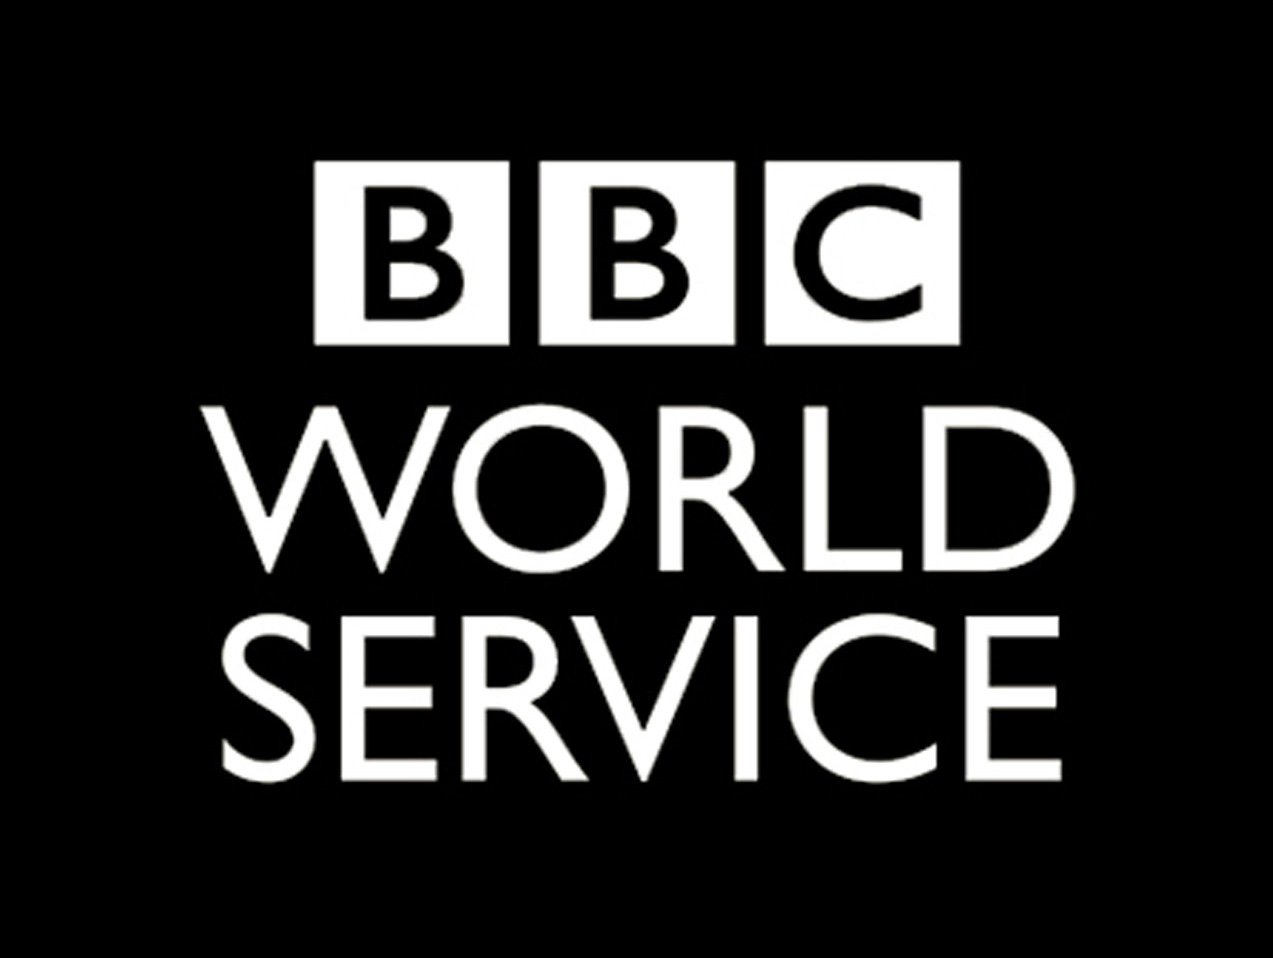 Jean Smith on BBC World Service